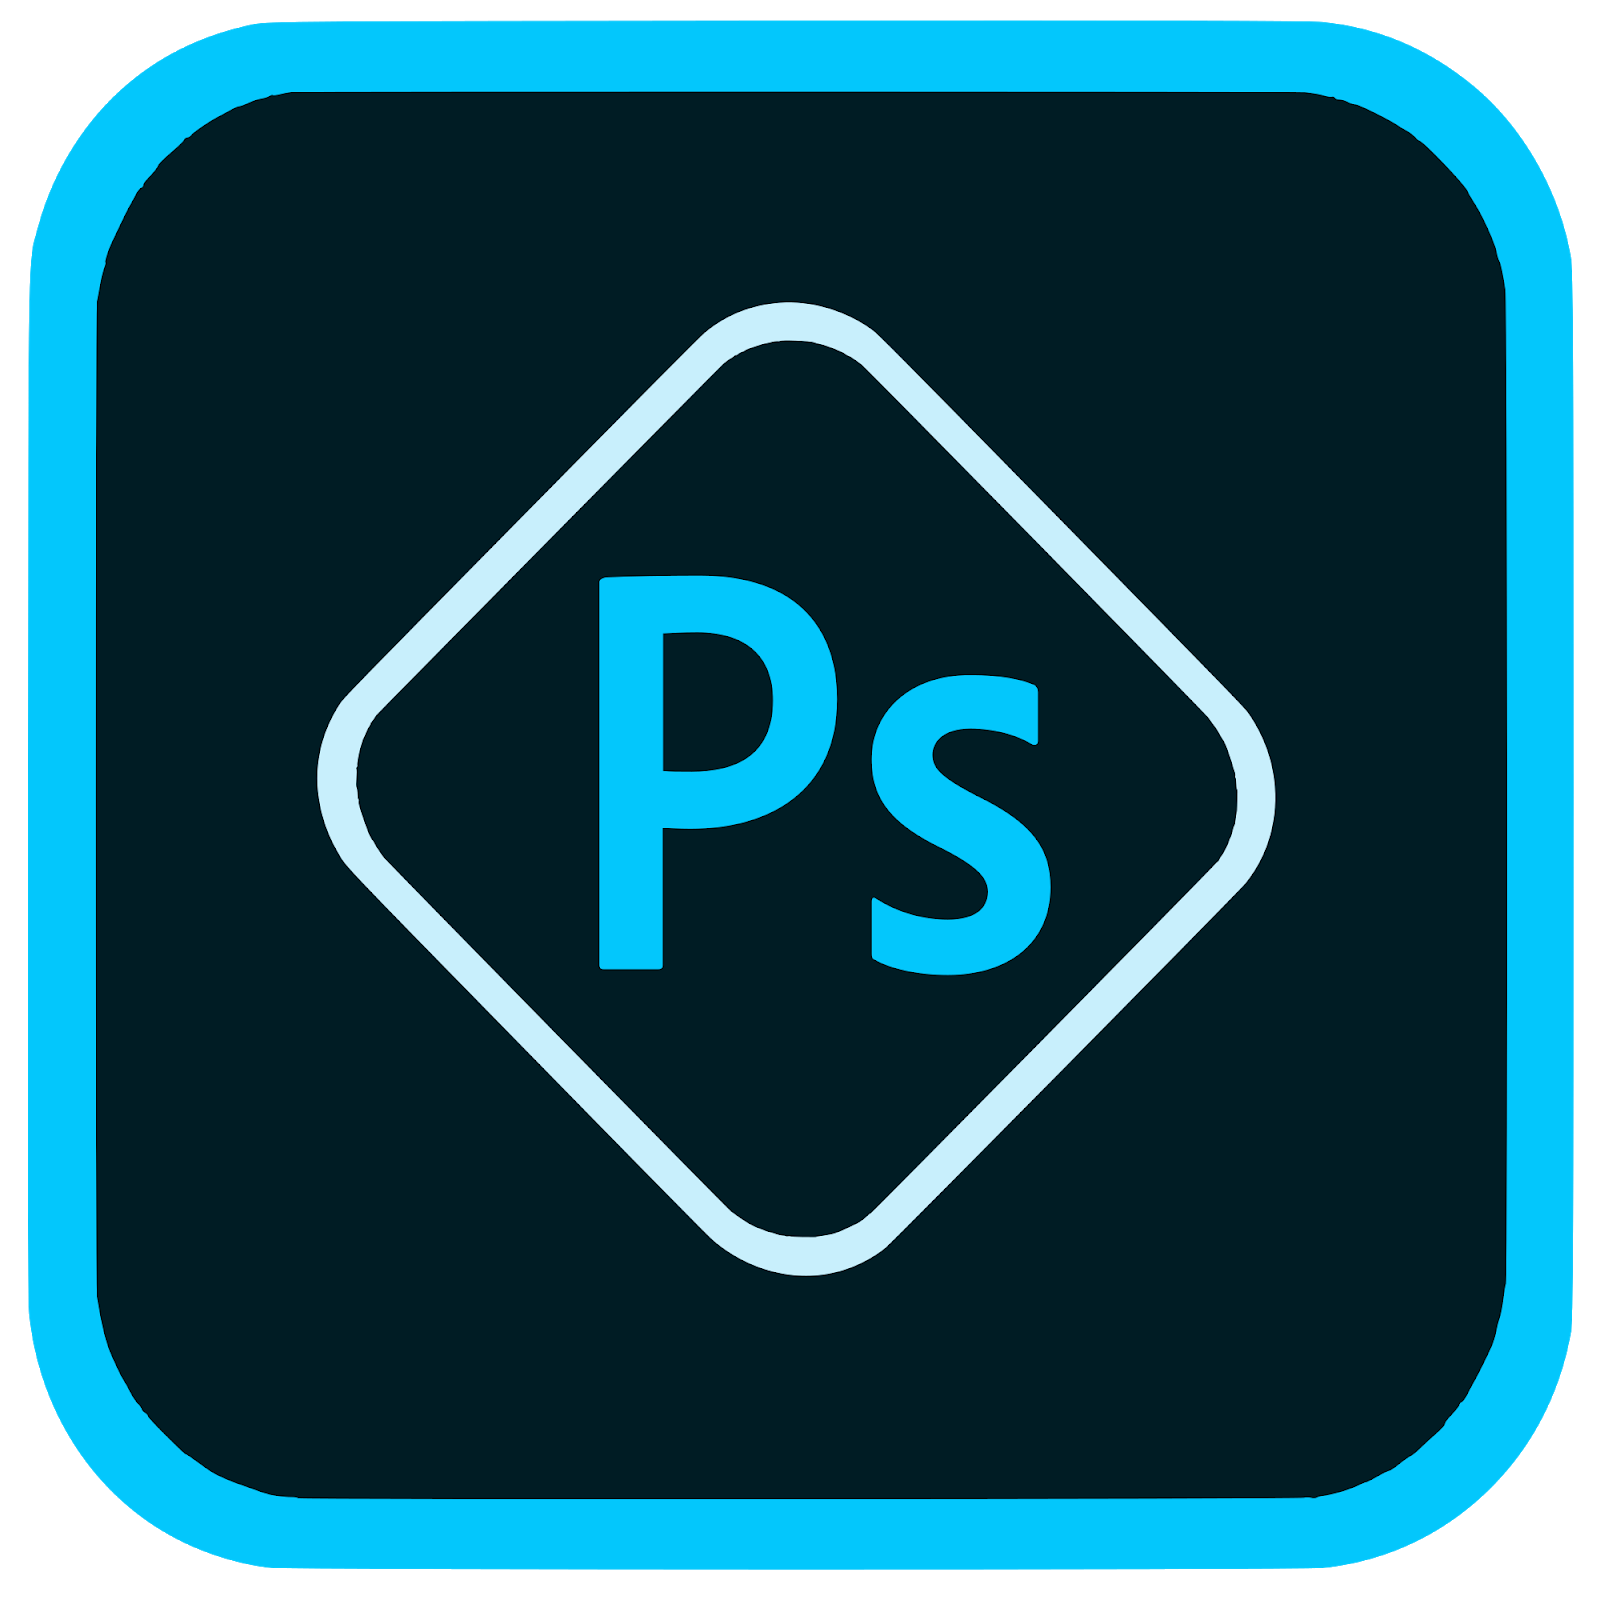 Download Free SVG Cut Files